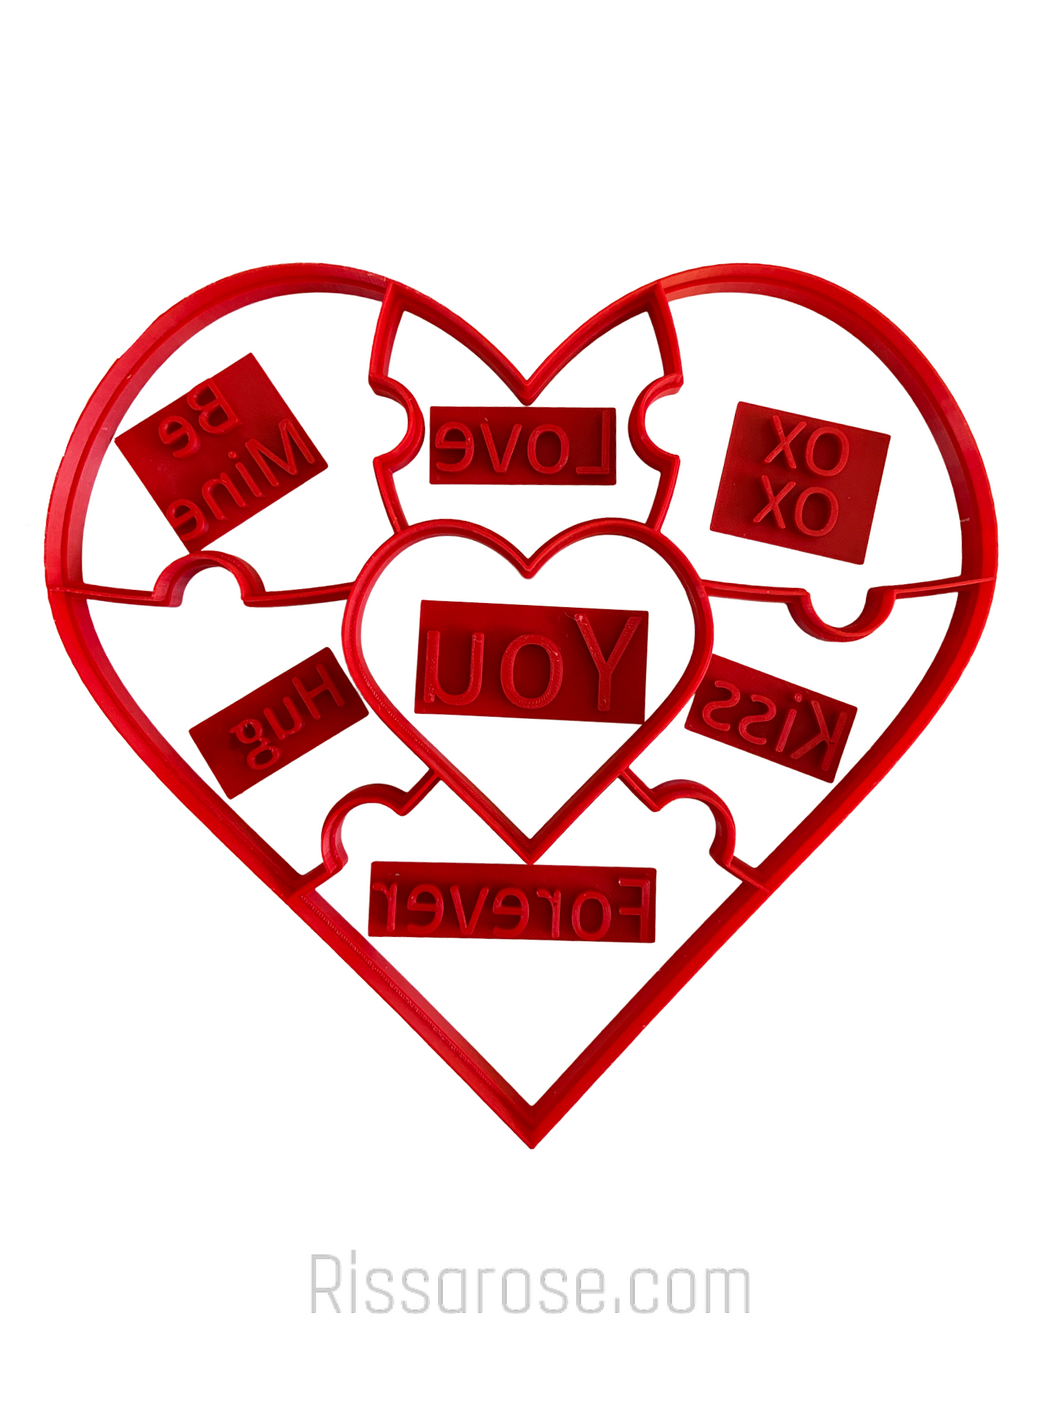 valentine's day cookie cutter stamp love heart puzzle conversation messages